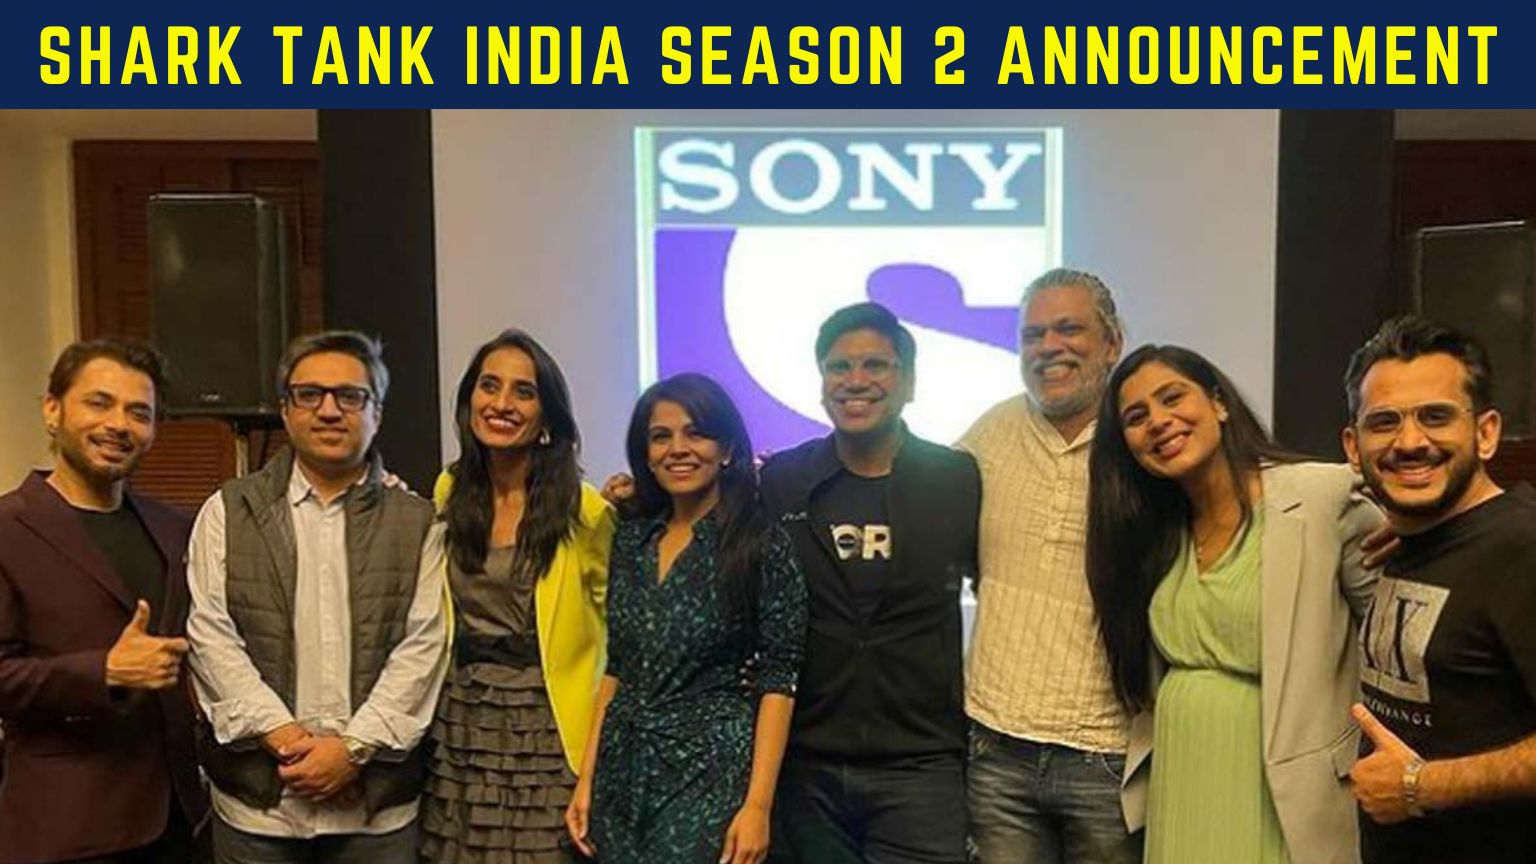 Shark tank india season 2 announcement